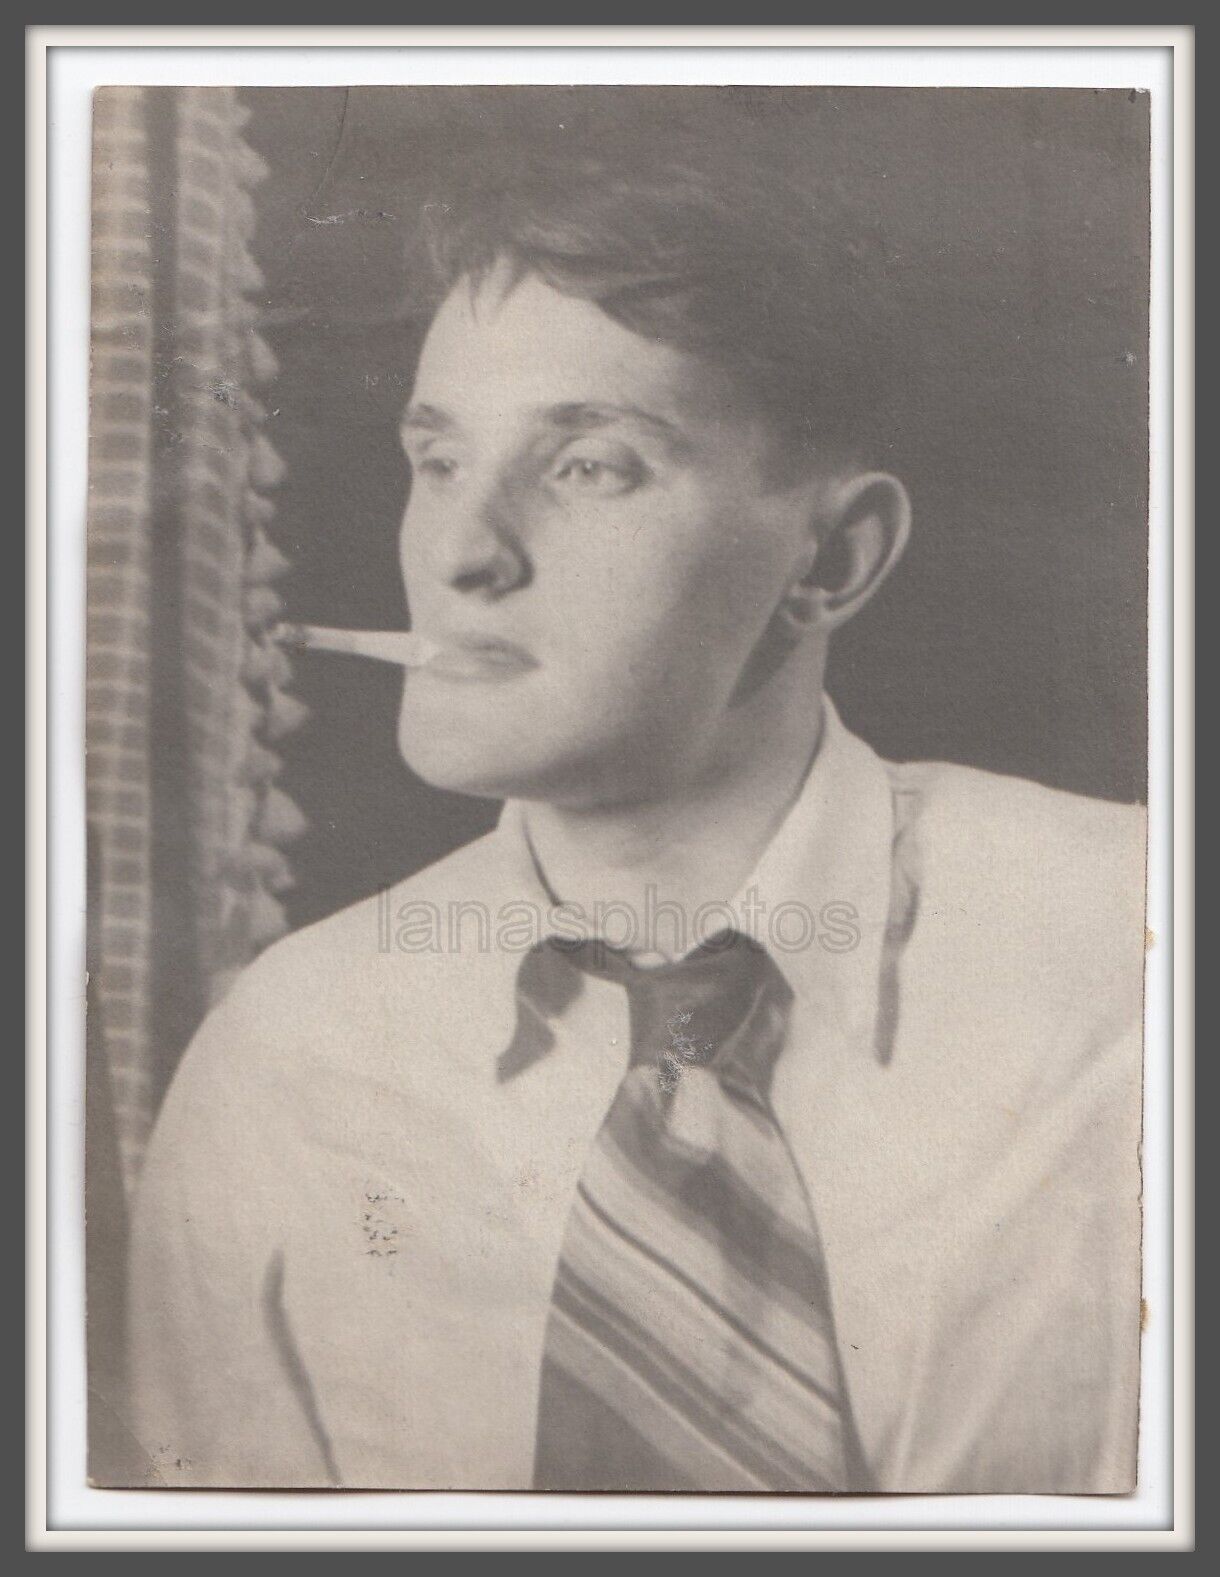 1940s Handsome young man smoking cigarette Stylish guy boy Fashion antique photo